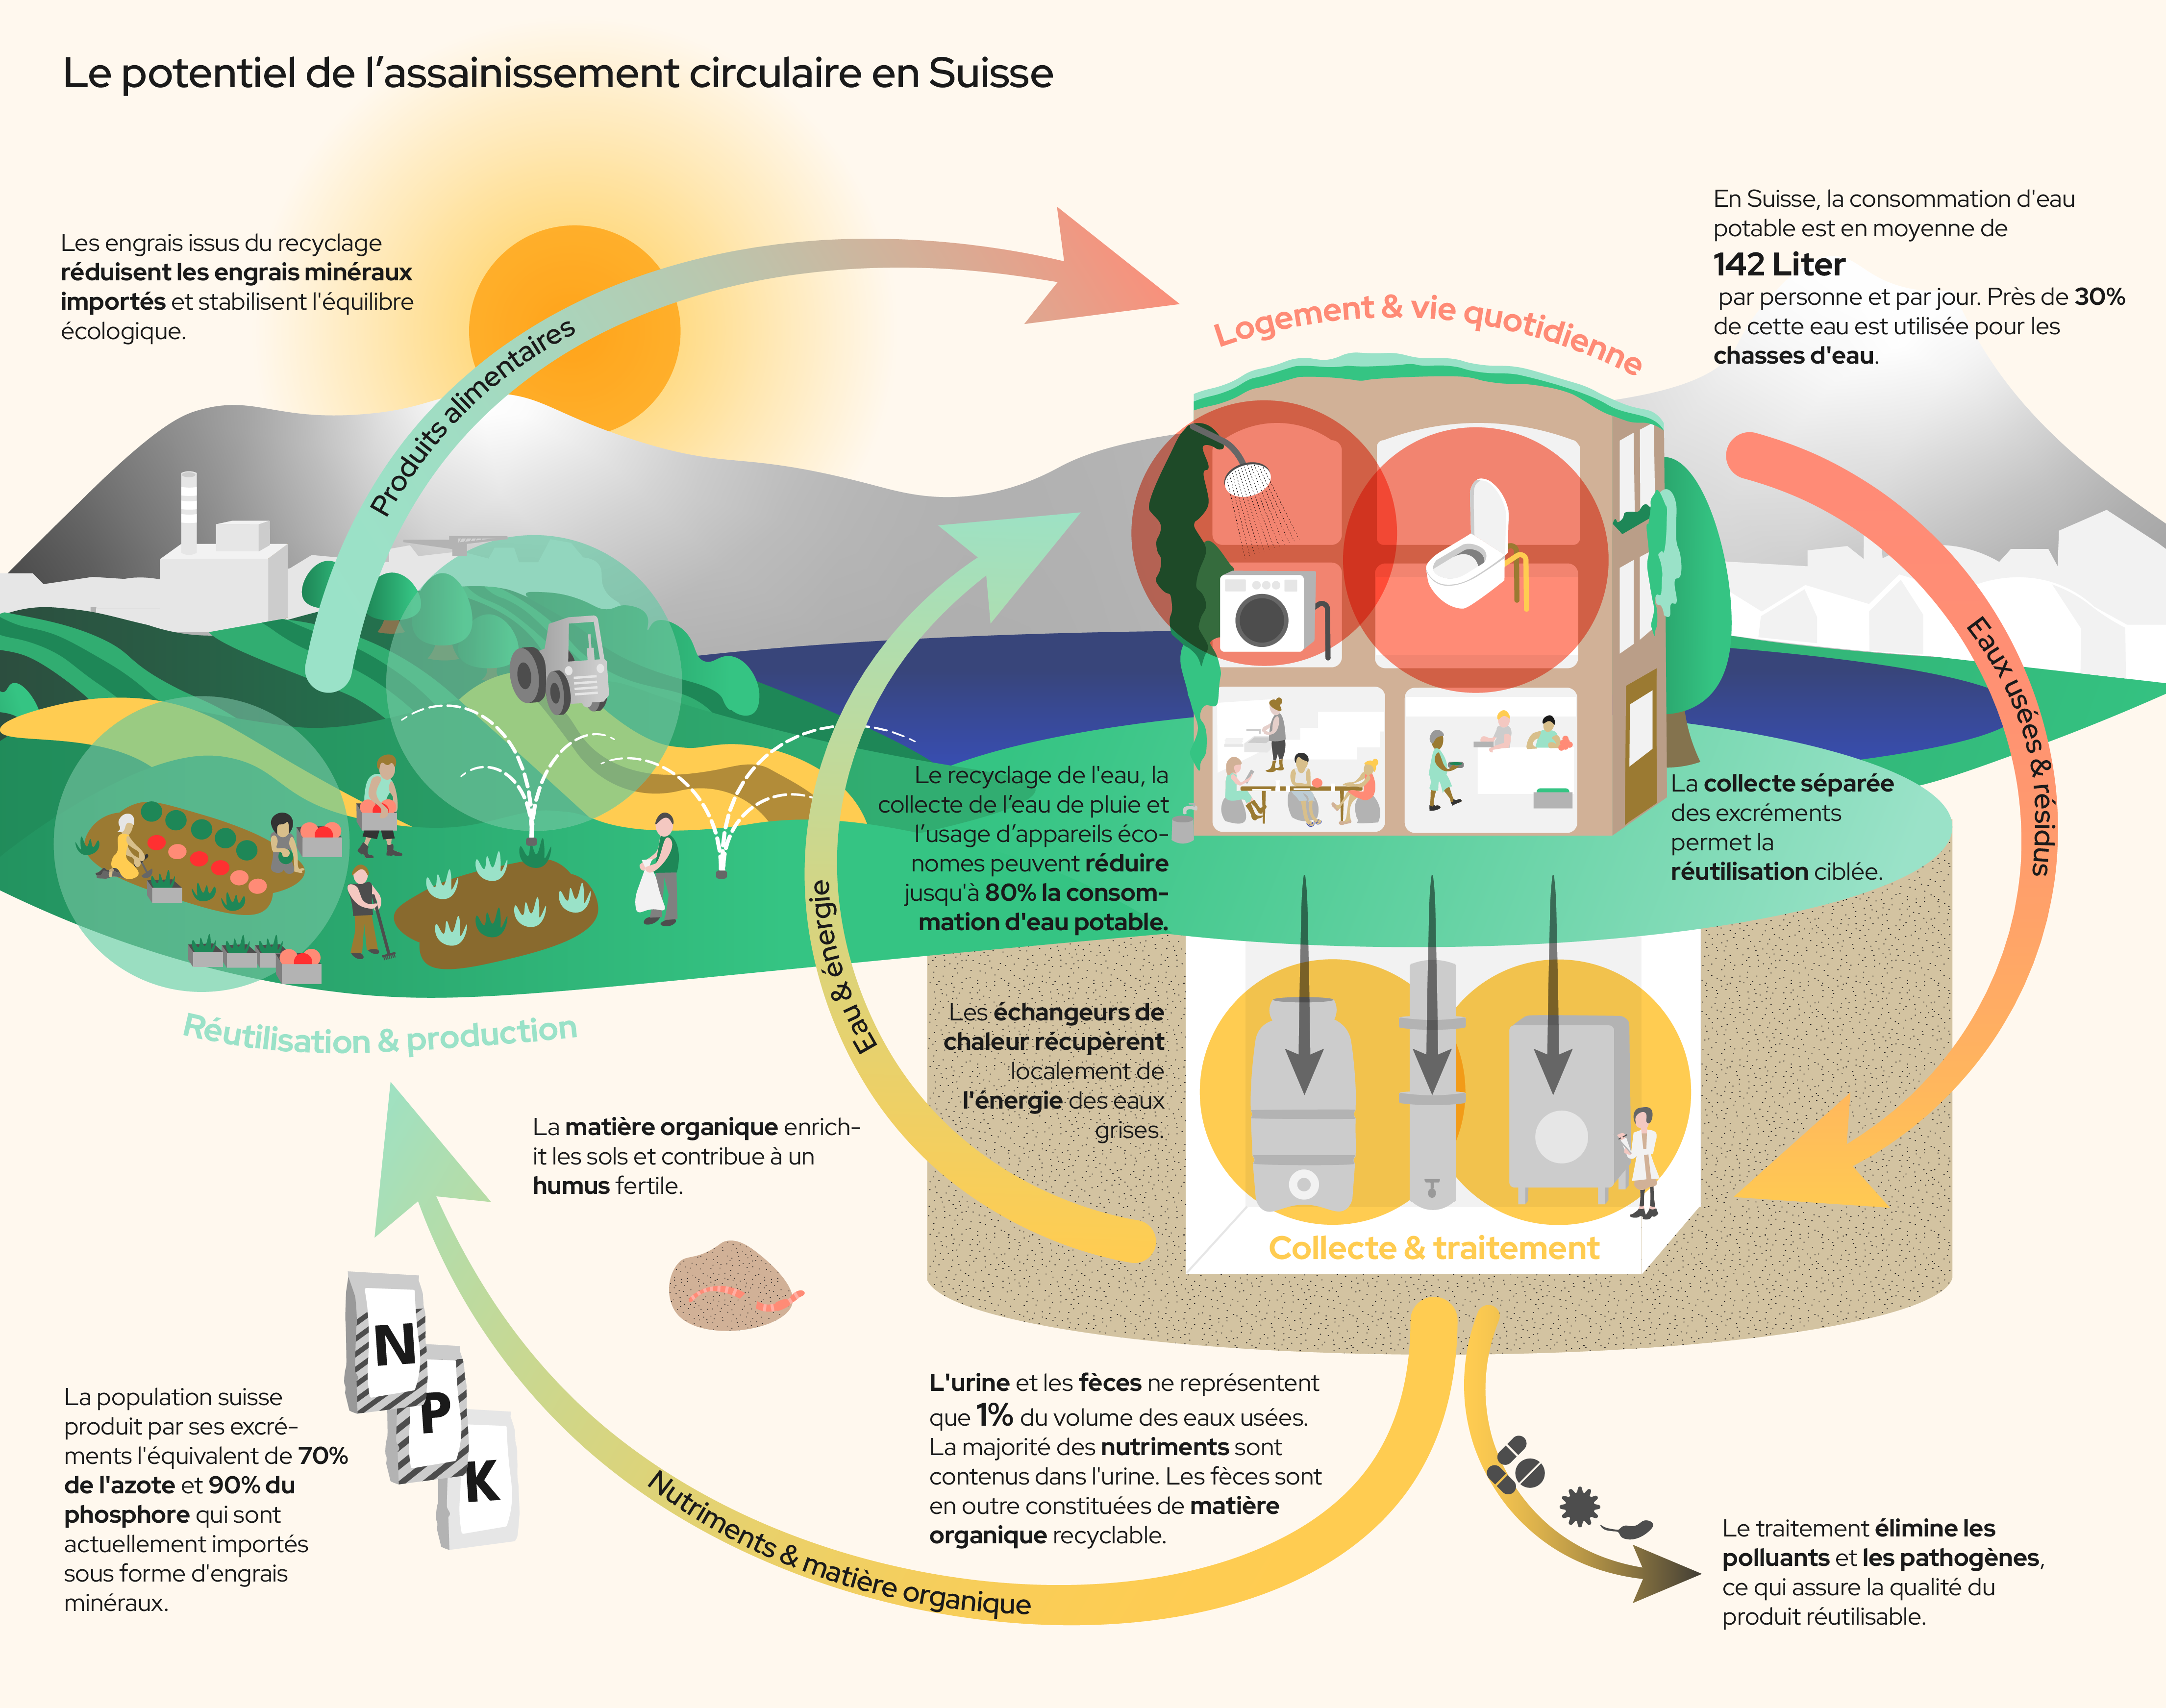 Infografic explaining the potential of circular sanitation in Switzerland